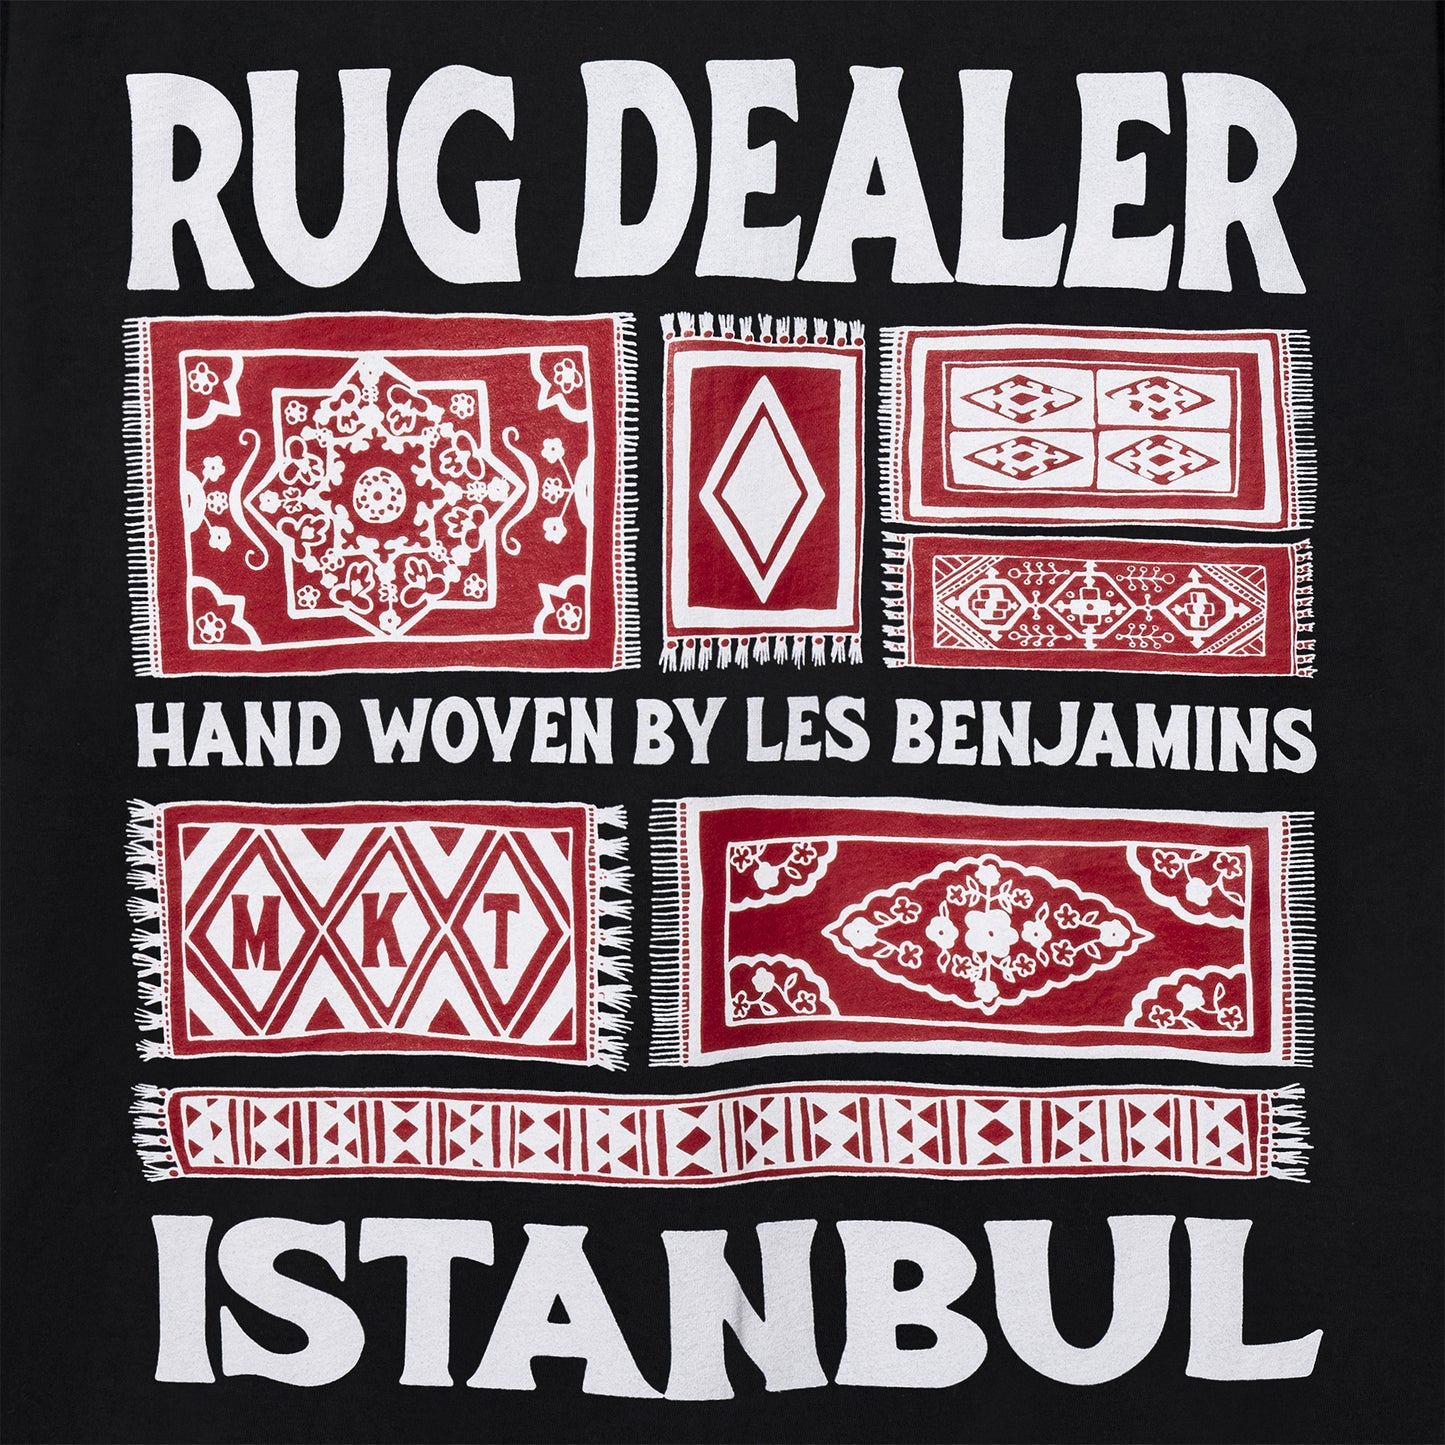 RUG DEALER ISTANBUL T-SHIRT